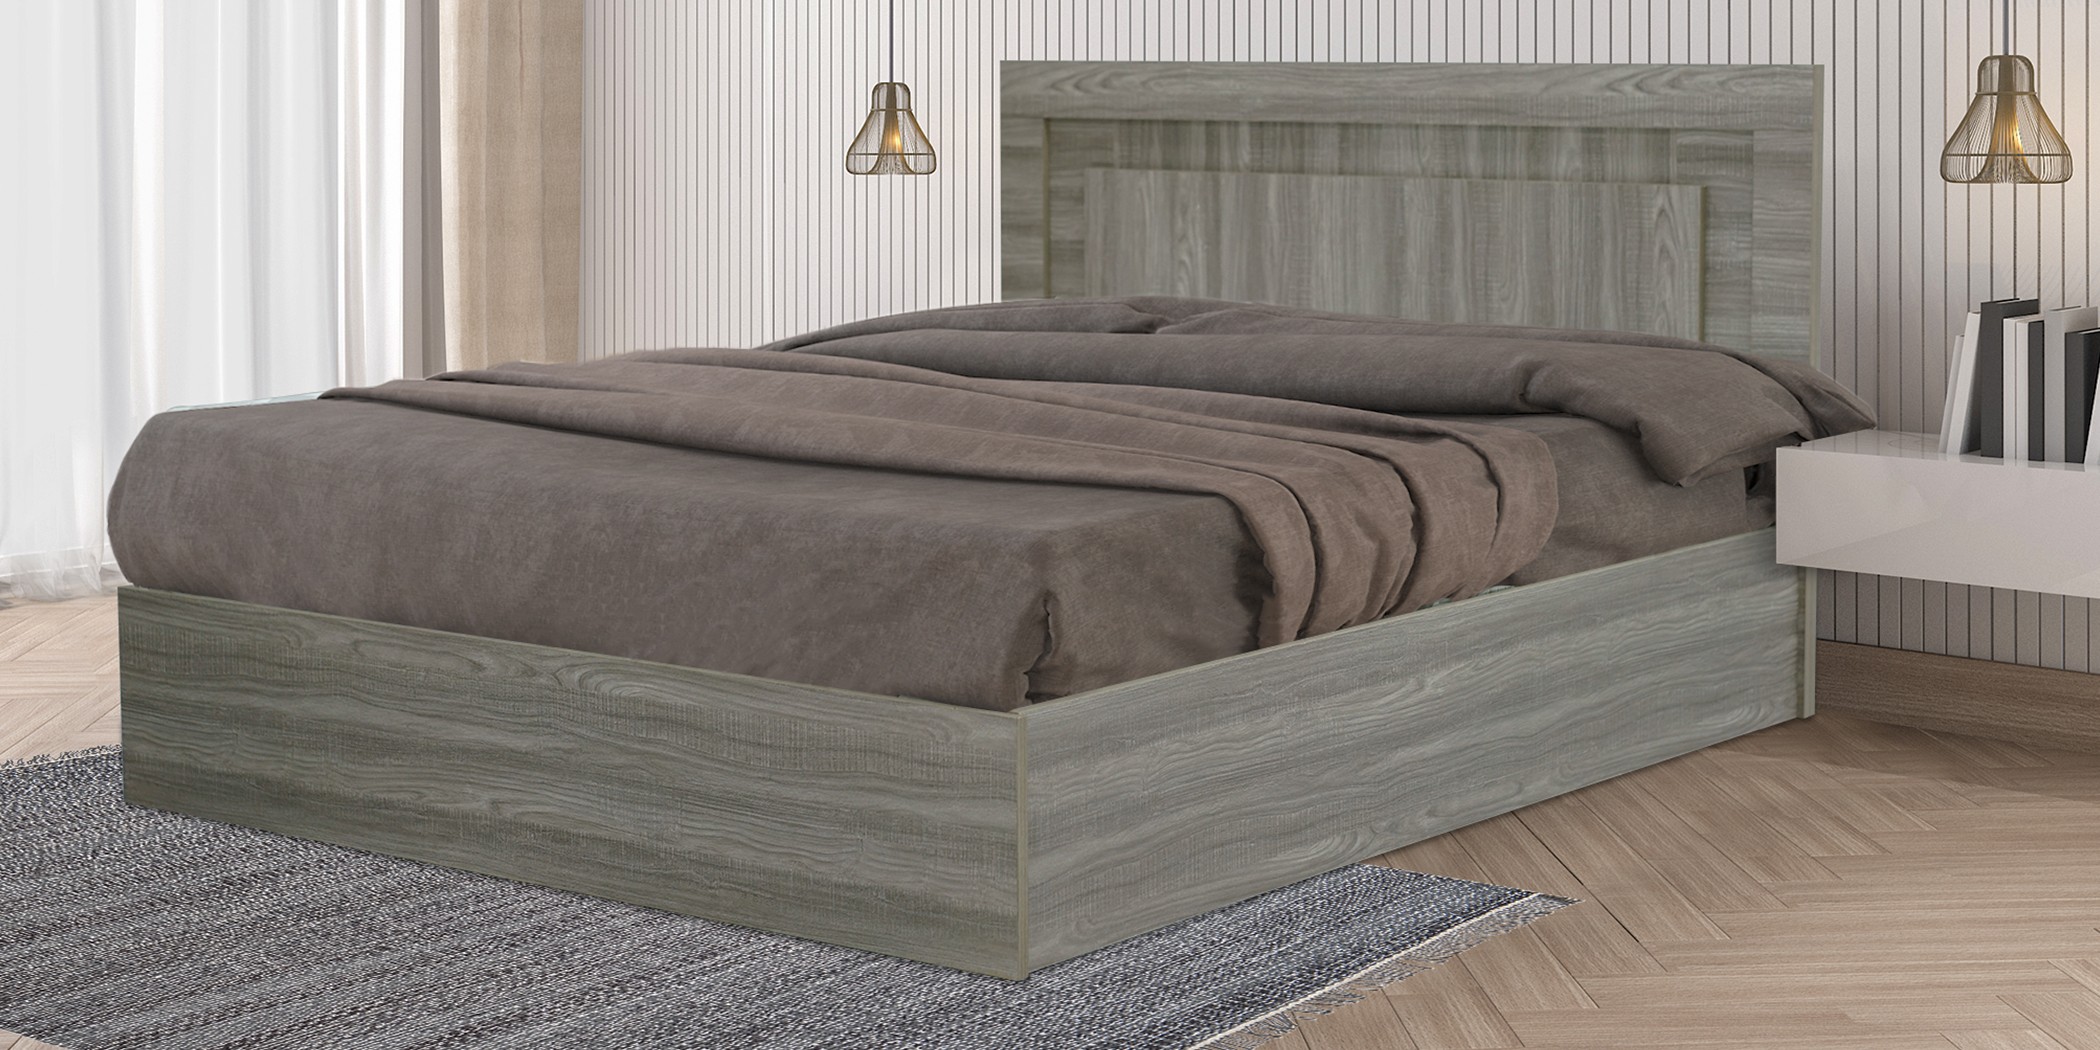 Colton Bed 150x190 cm MDF Arom